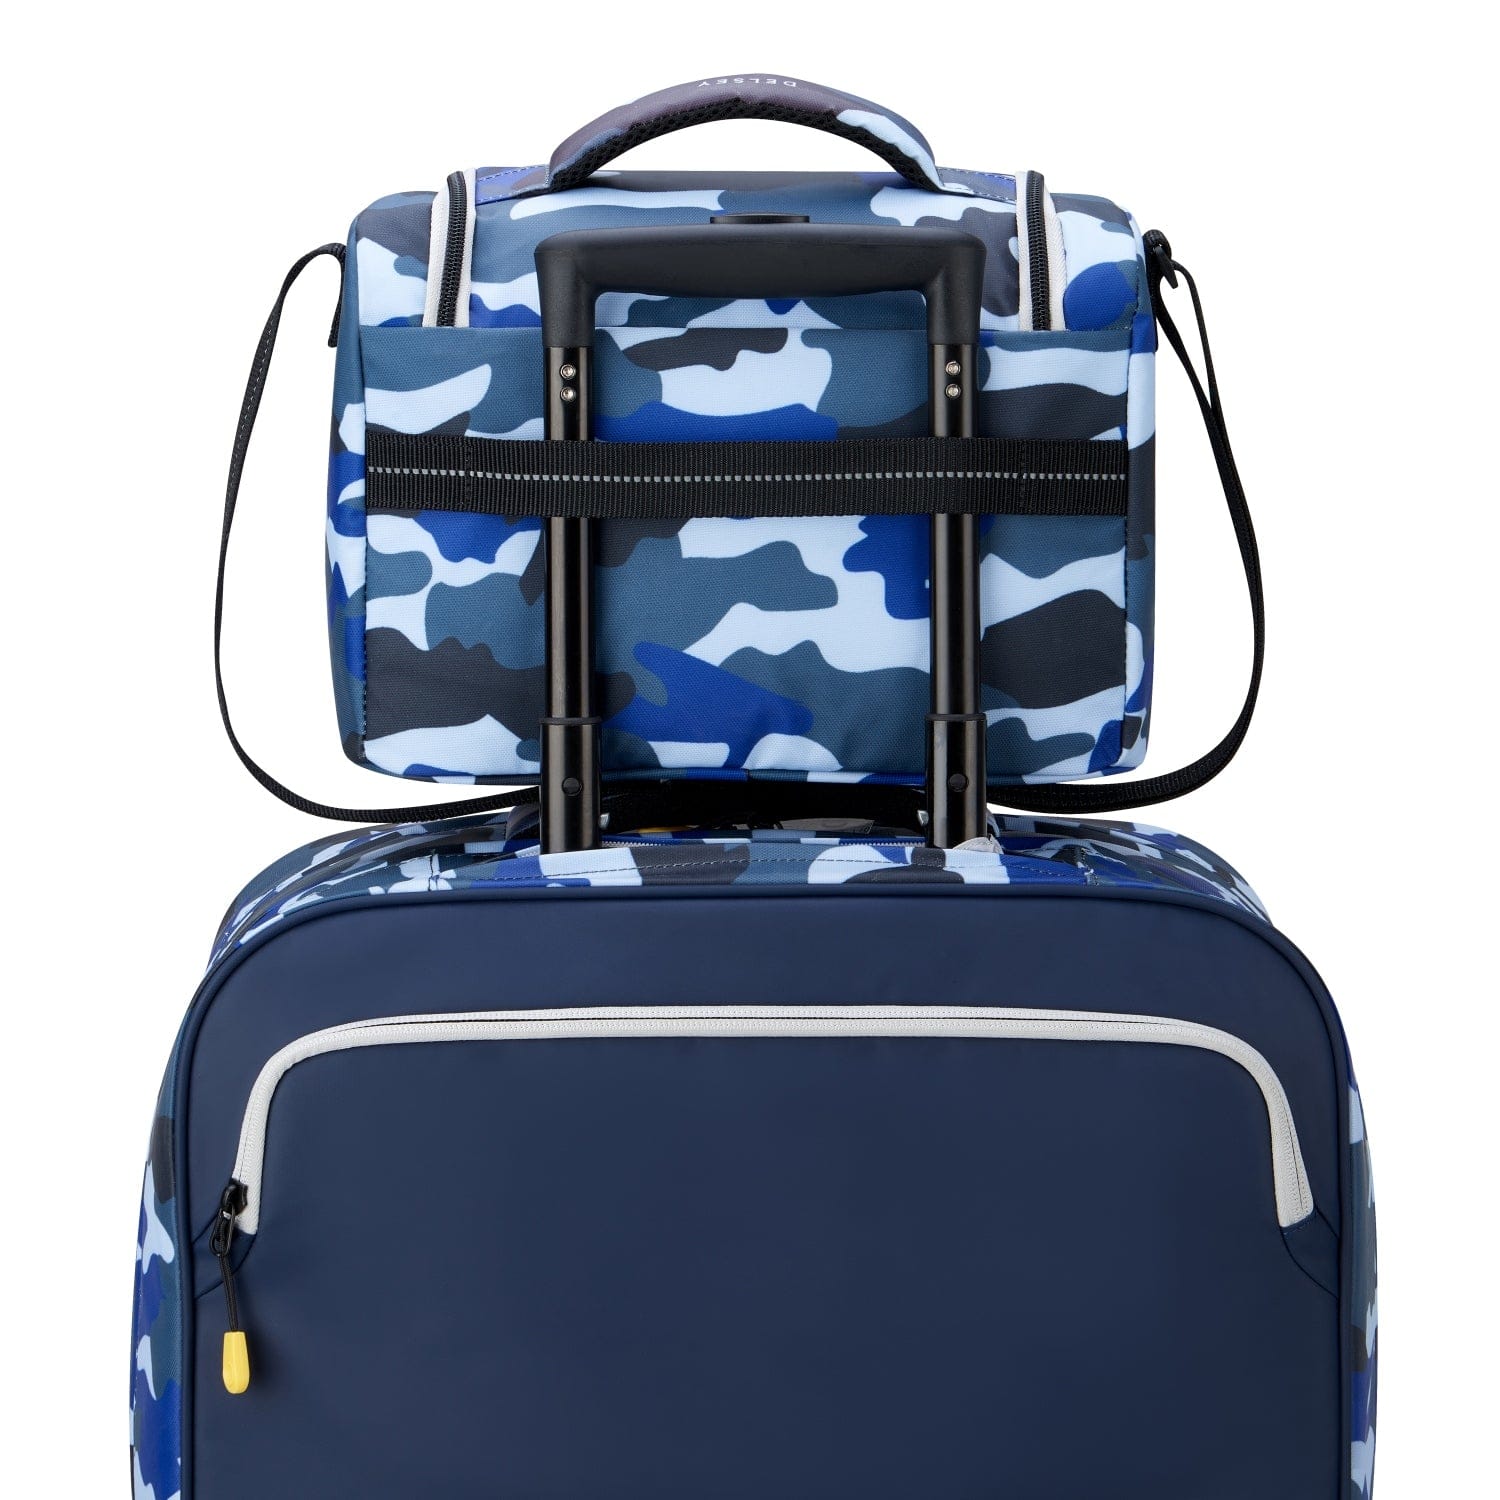 Delsey BTS 2023 Isothermal Lunch Bag Camo Blue - 00338919022